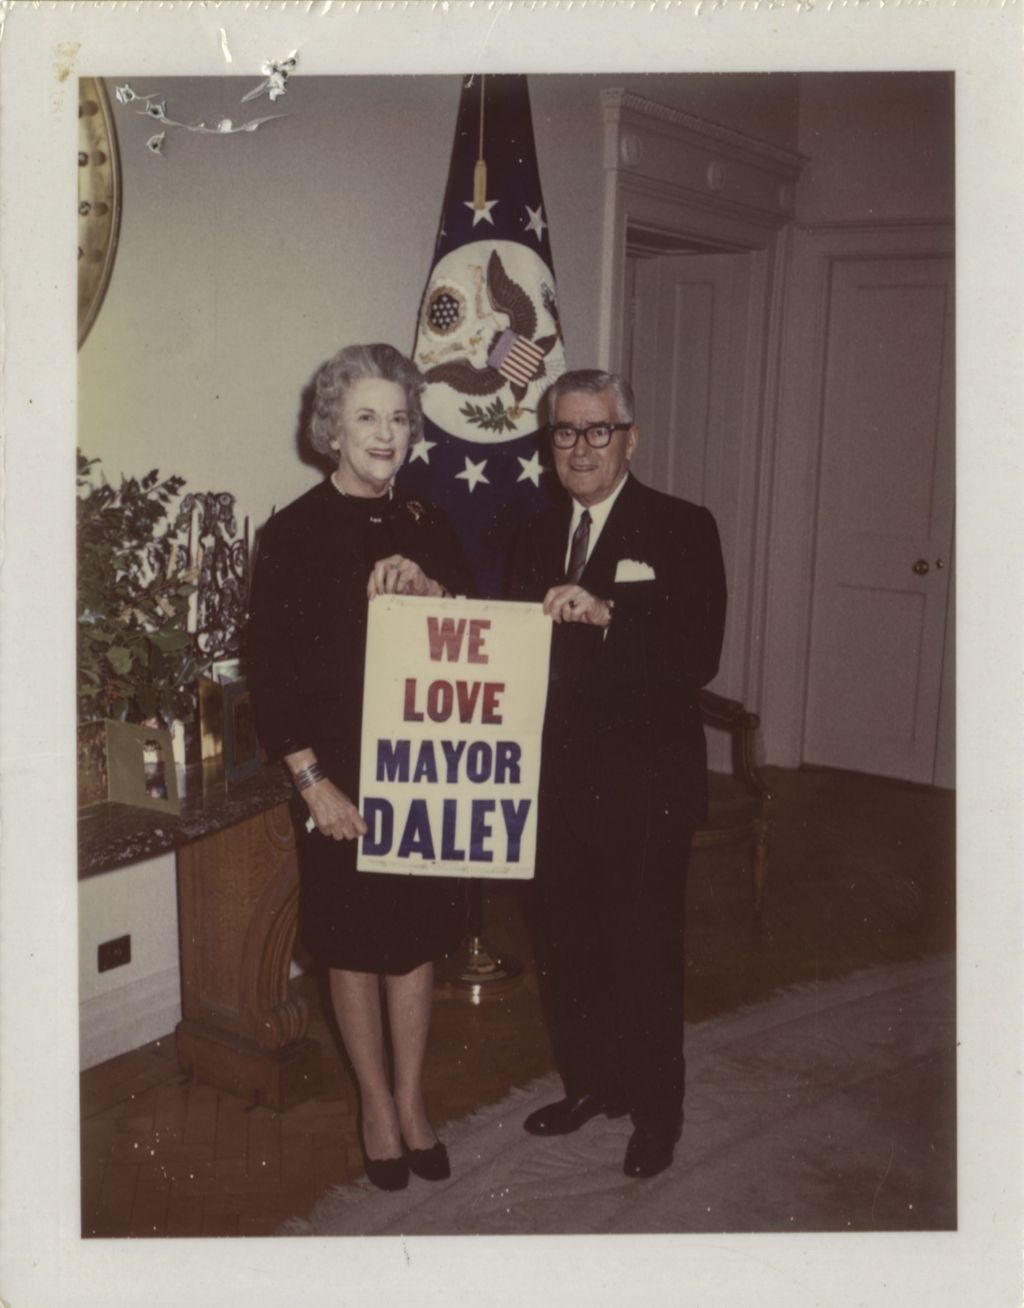 Leo J. Sheridan and Bea Sheridan with a "We Love Mayor Daley" poster